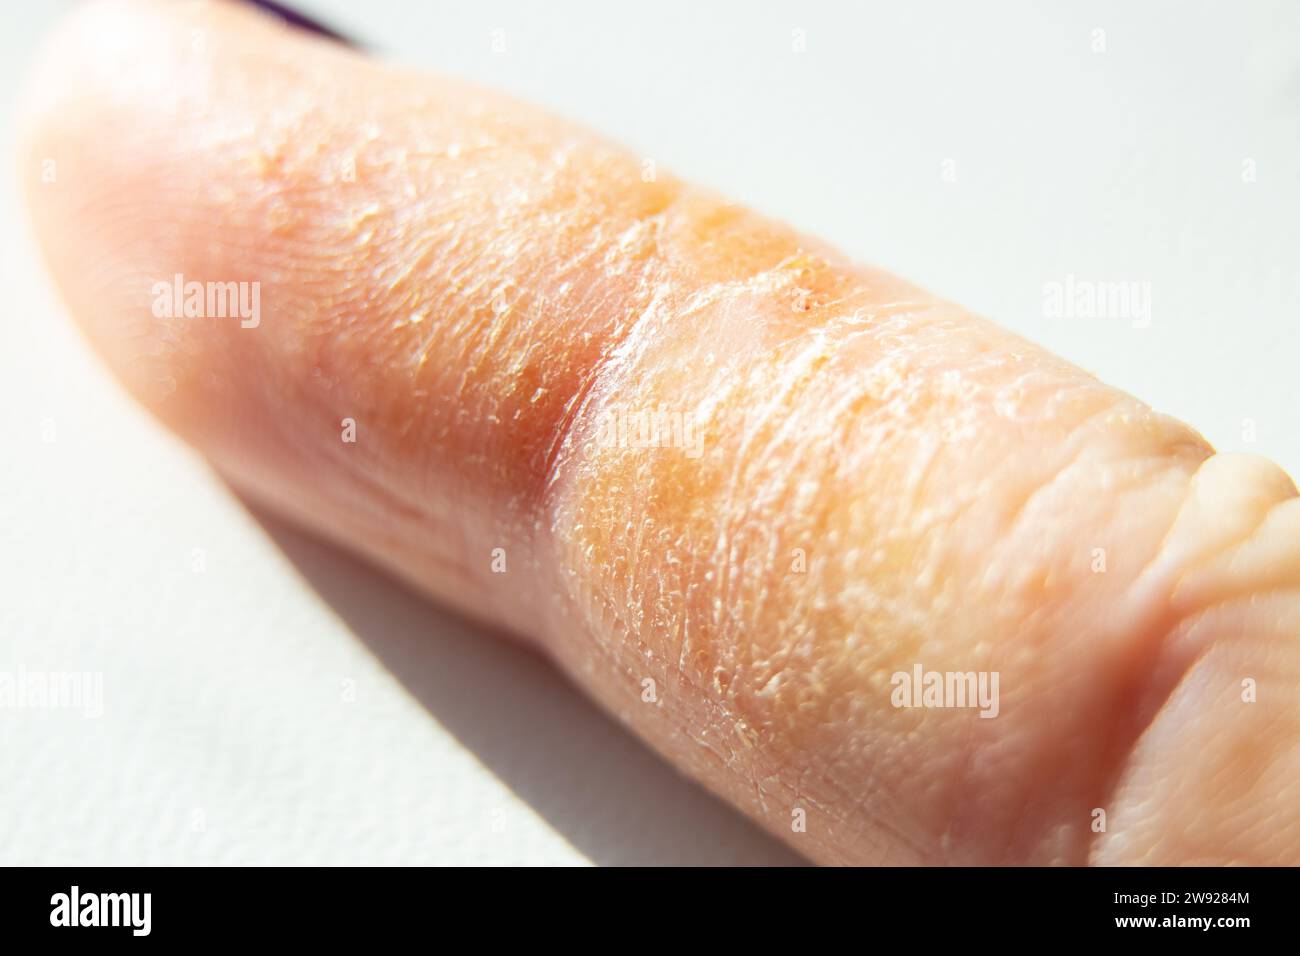 Allergic reaction and rash on finger, skin irritation, dry skin close-up Stock Photo